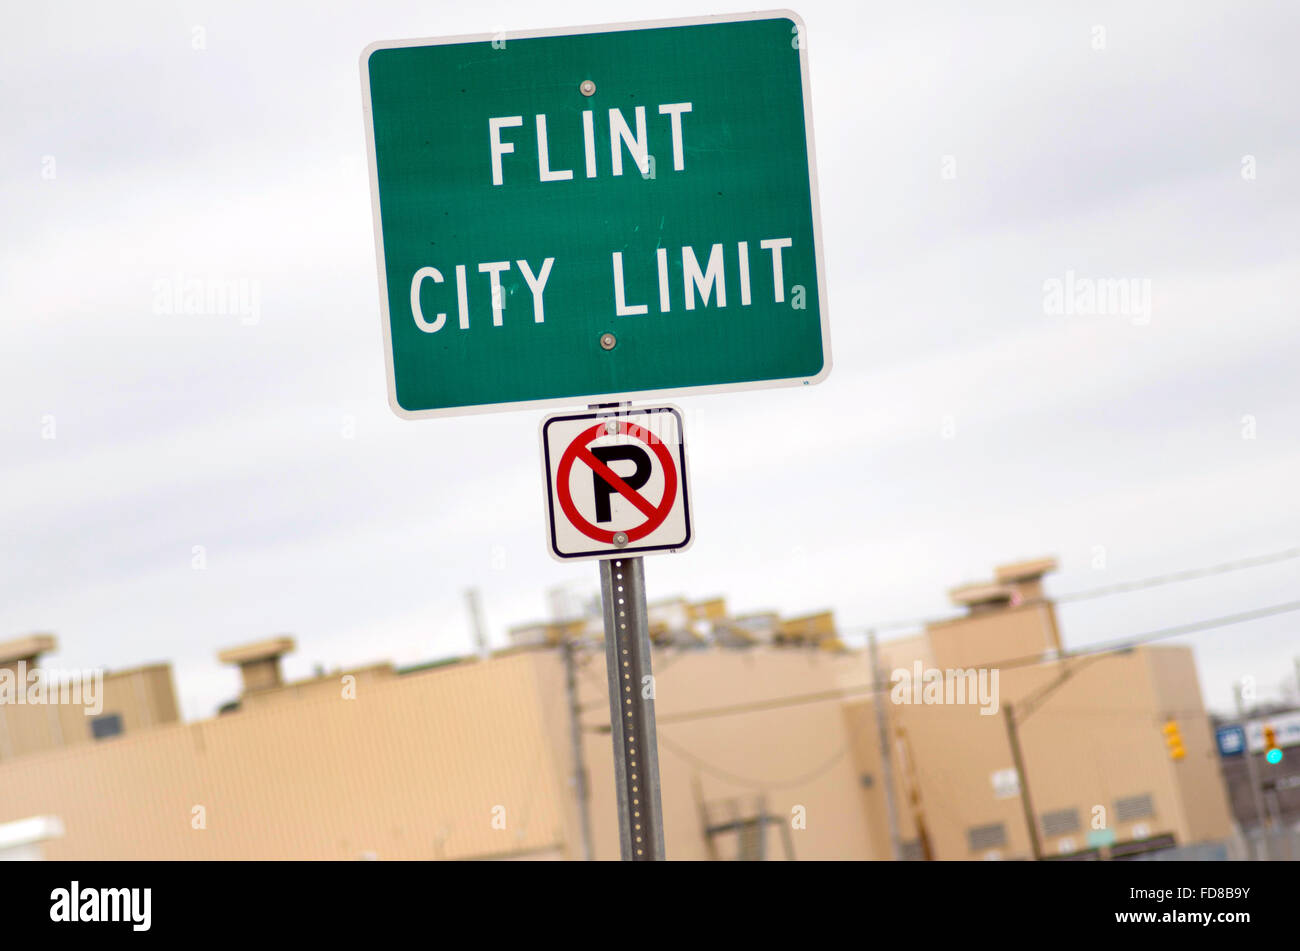 Flint City Limit Sign on the street. Stock Photo